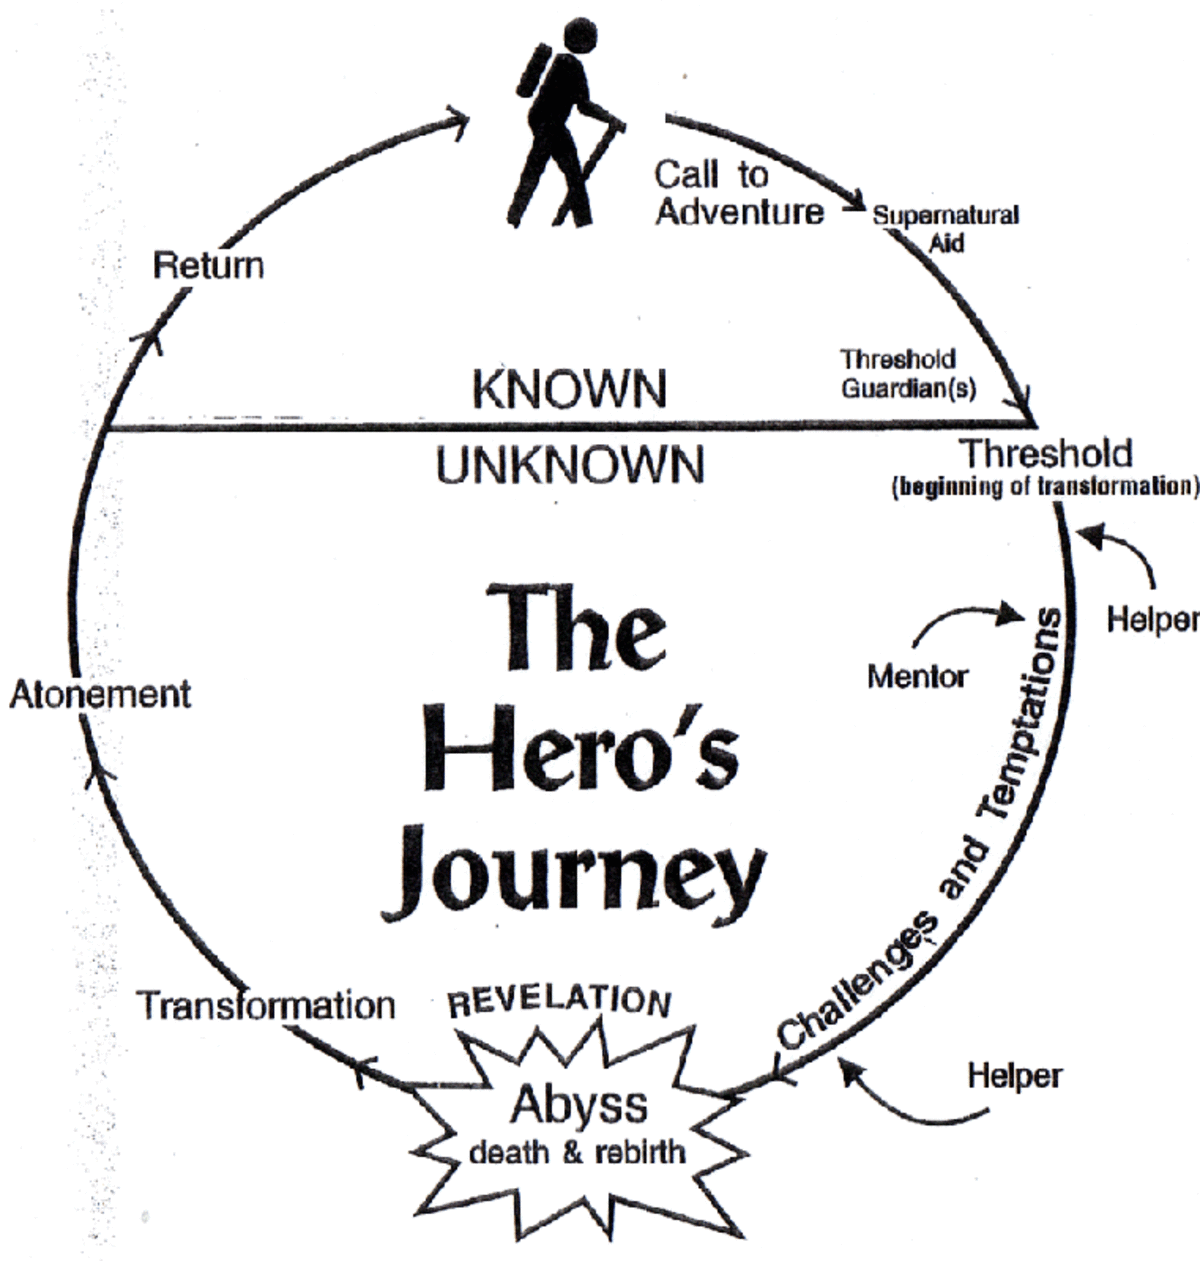 hero's journey worksheet pdf